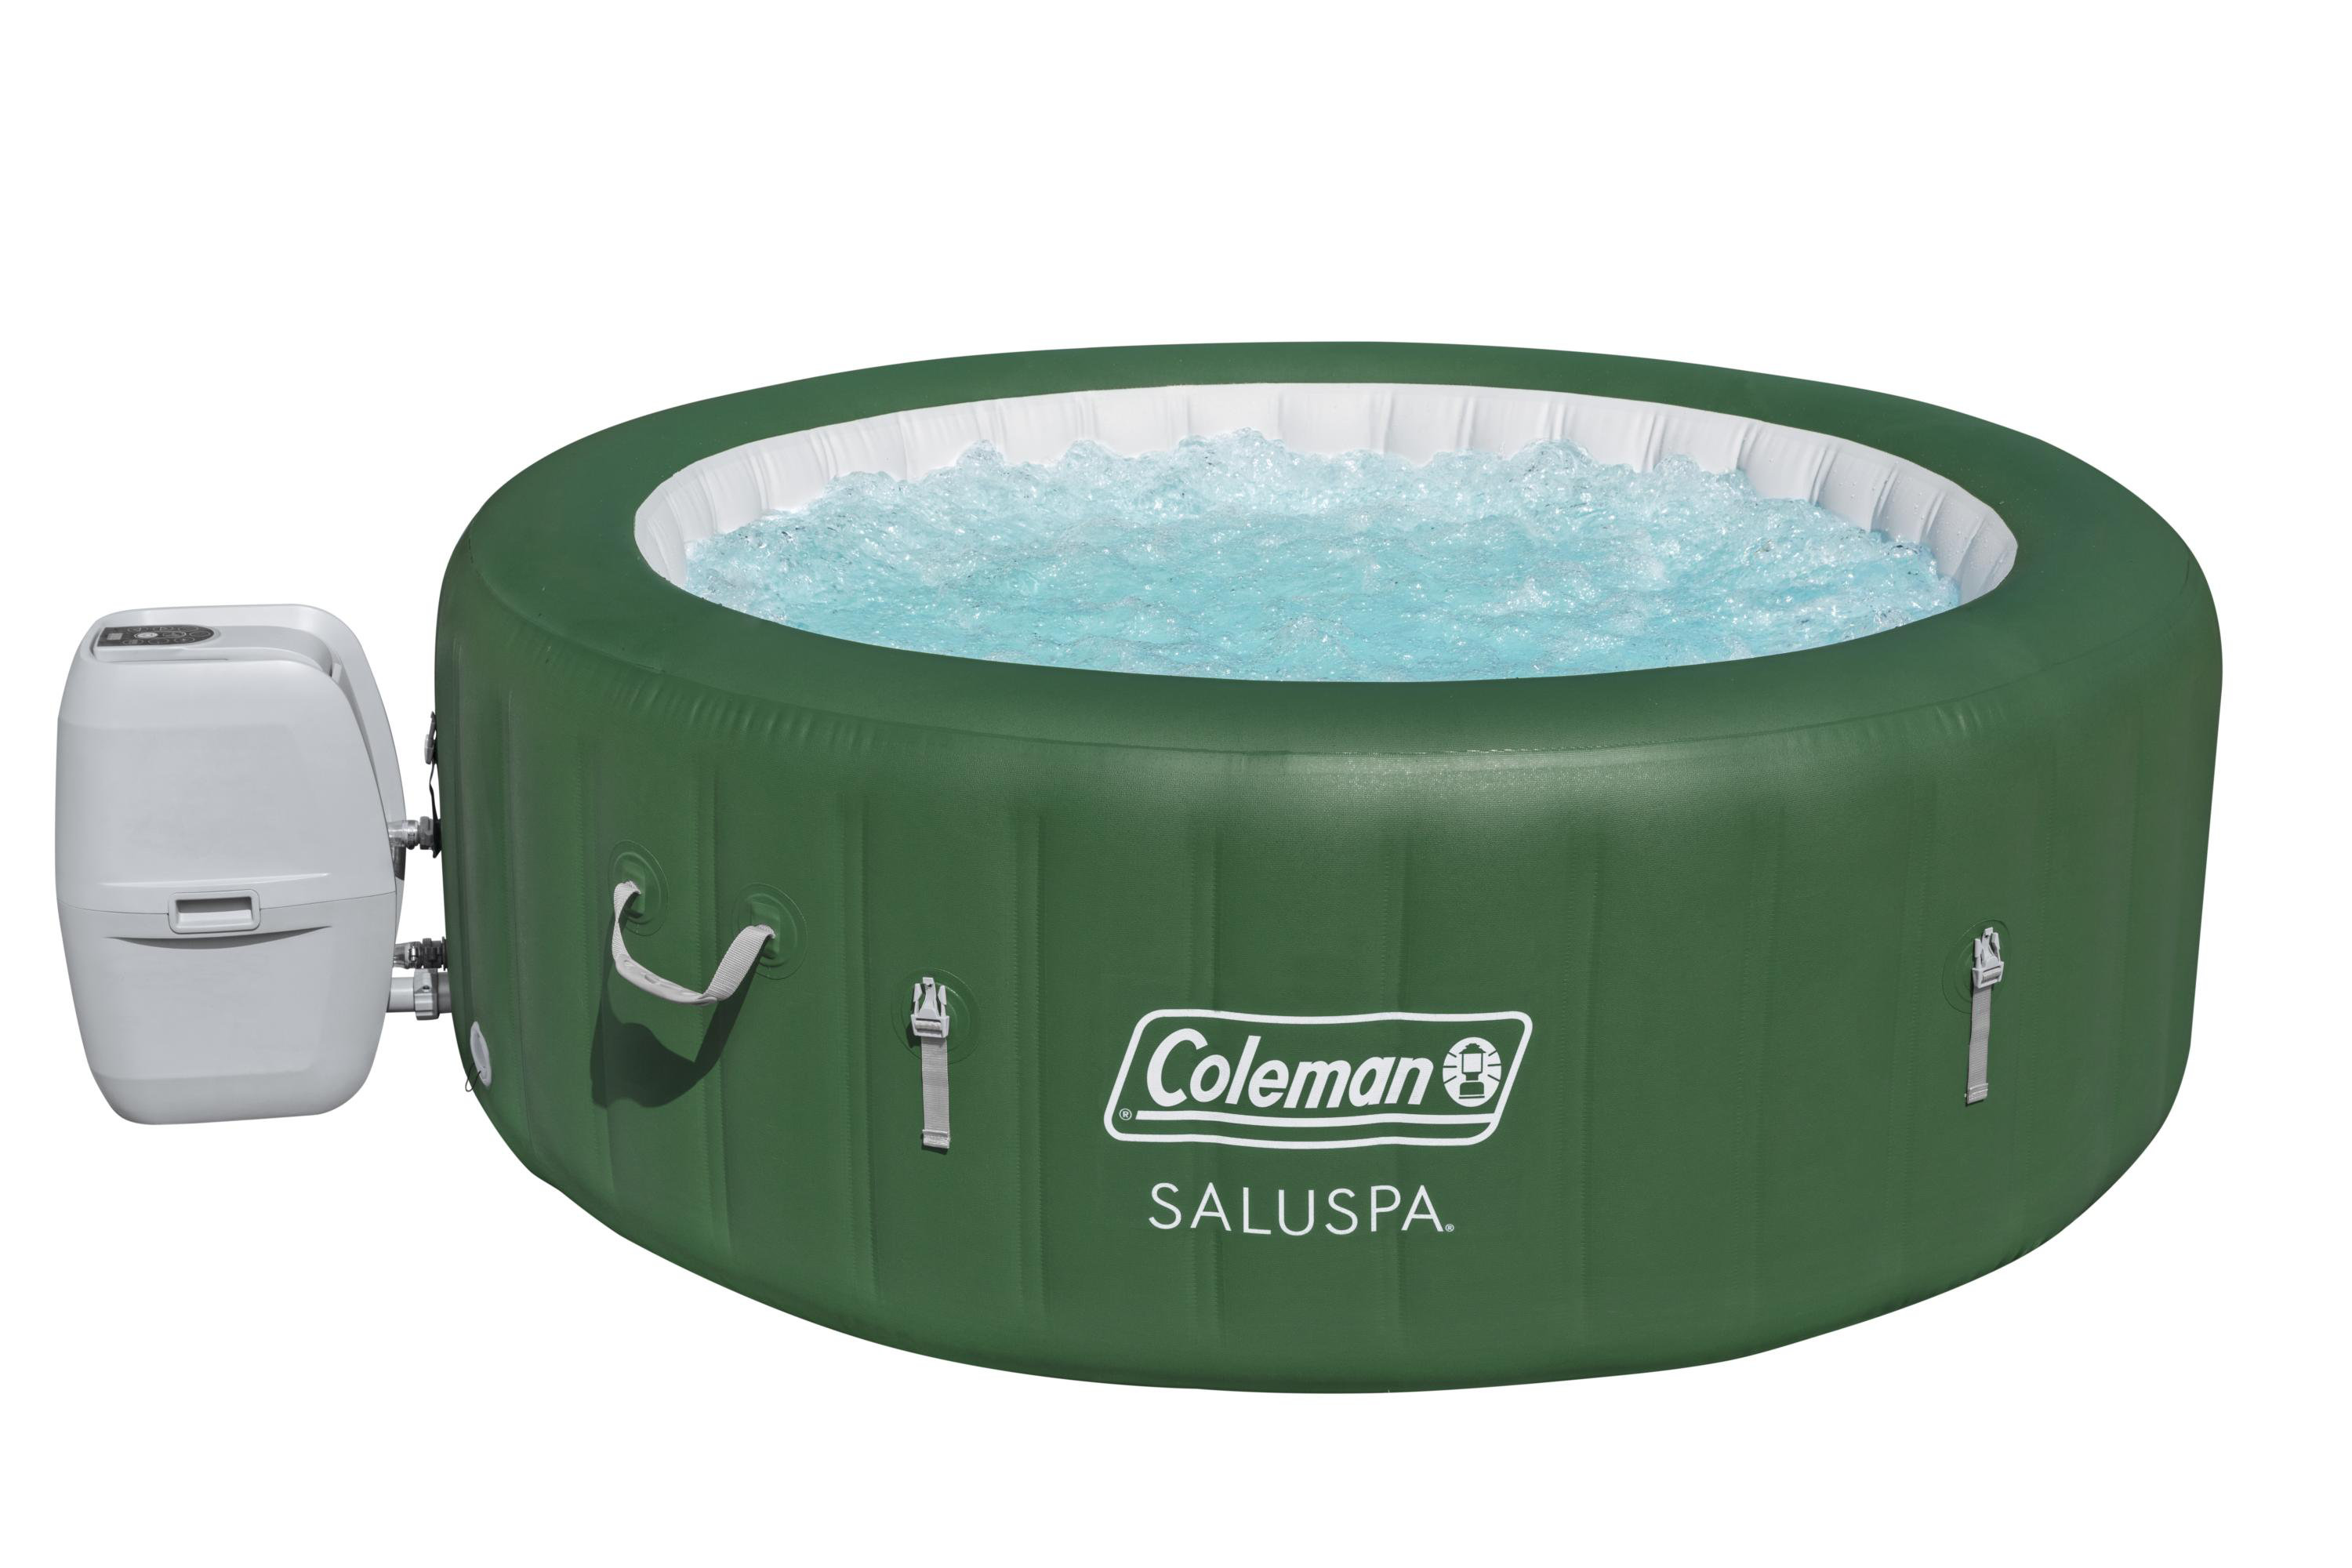 Coleman Saluspa Person Portable Inflatable Outdoor Hot Tub Spa